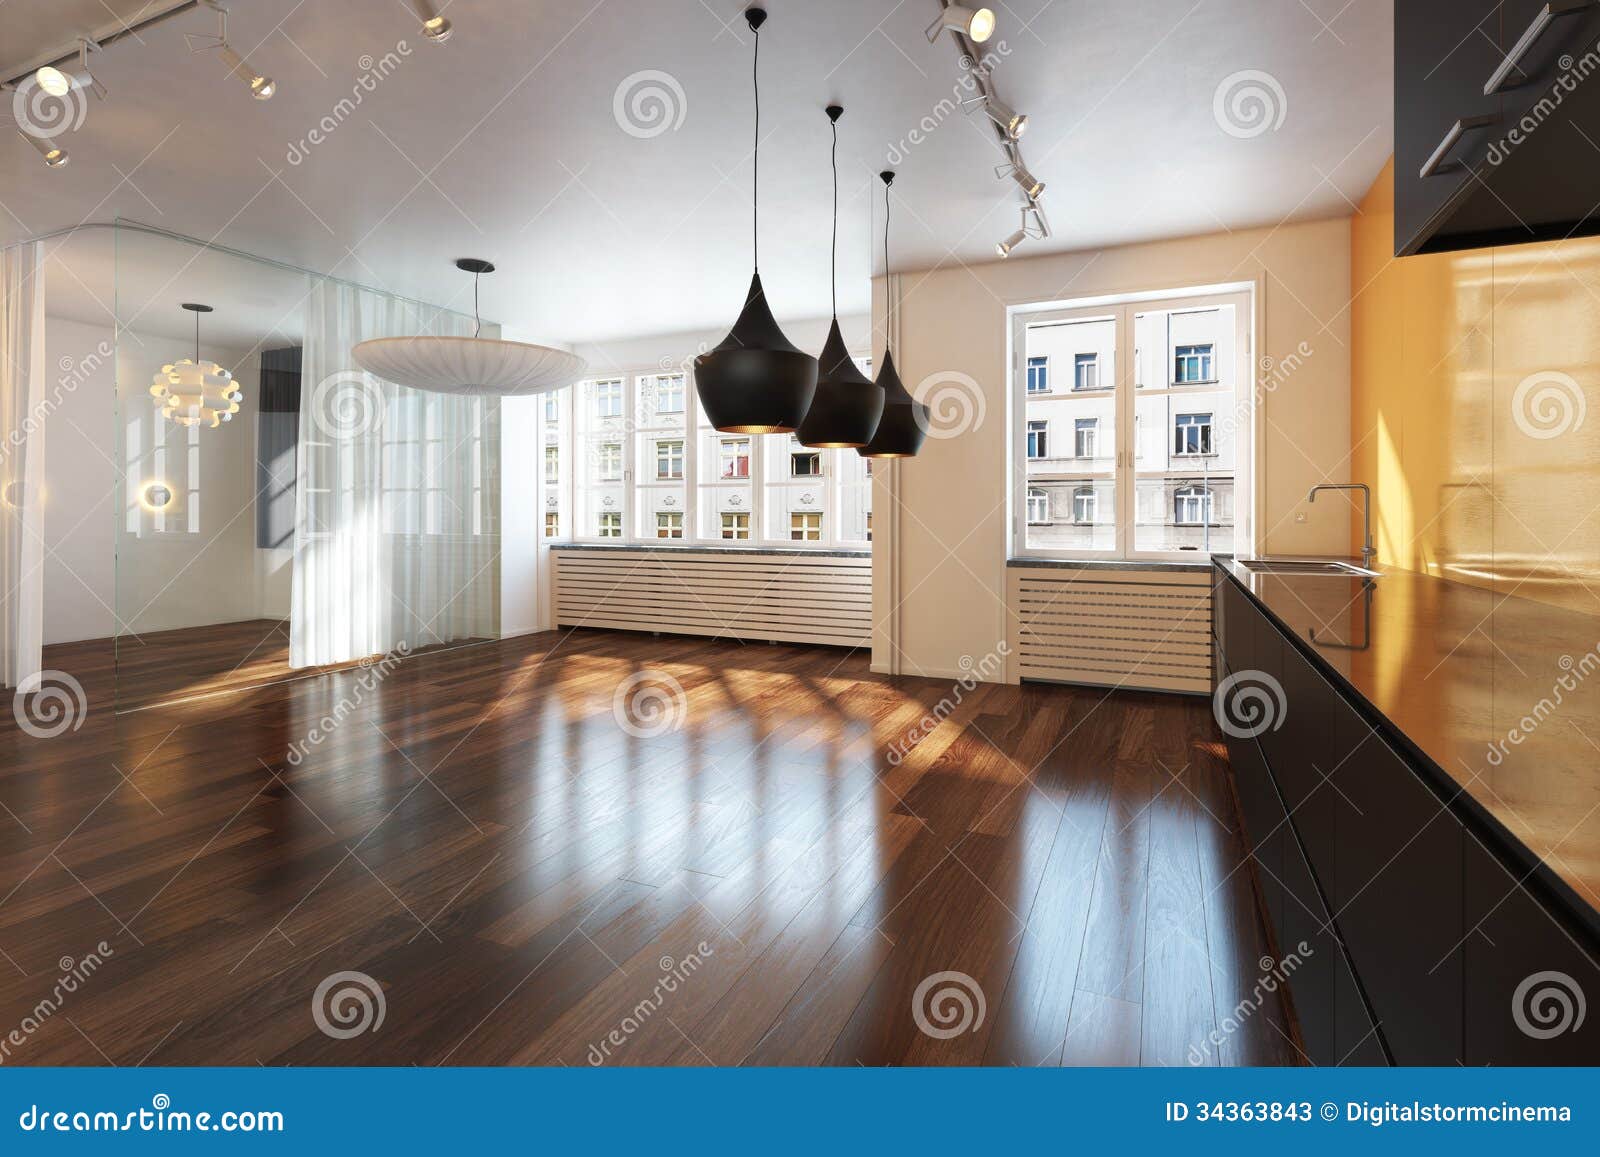 empty interior residence with hardwood floors .